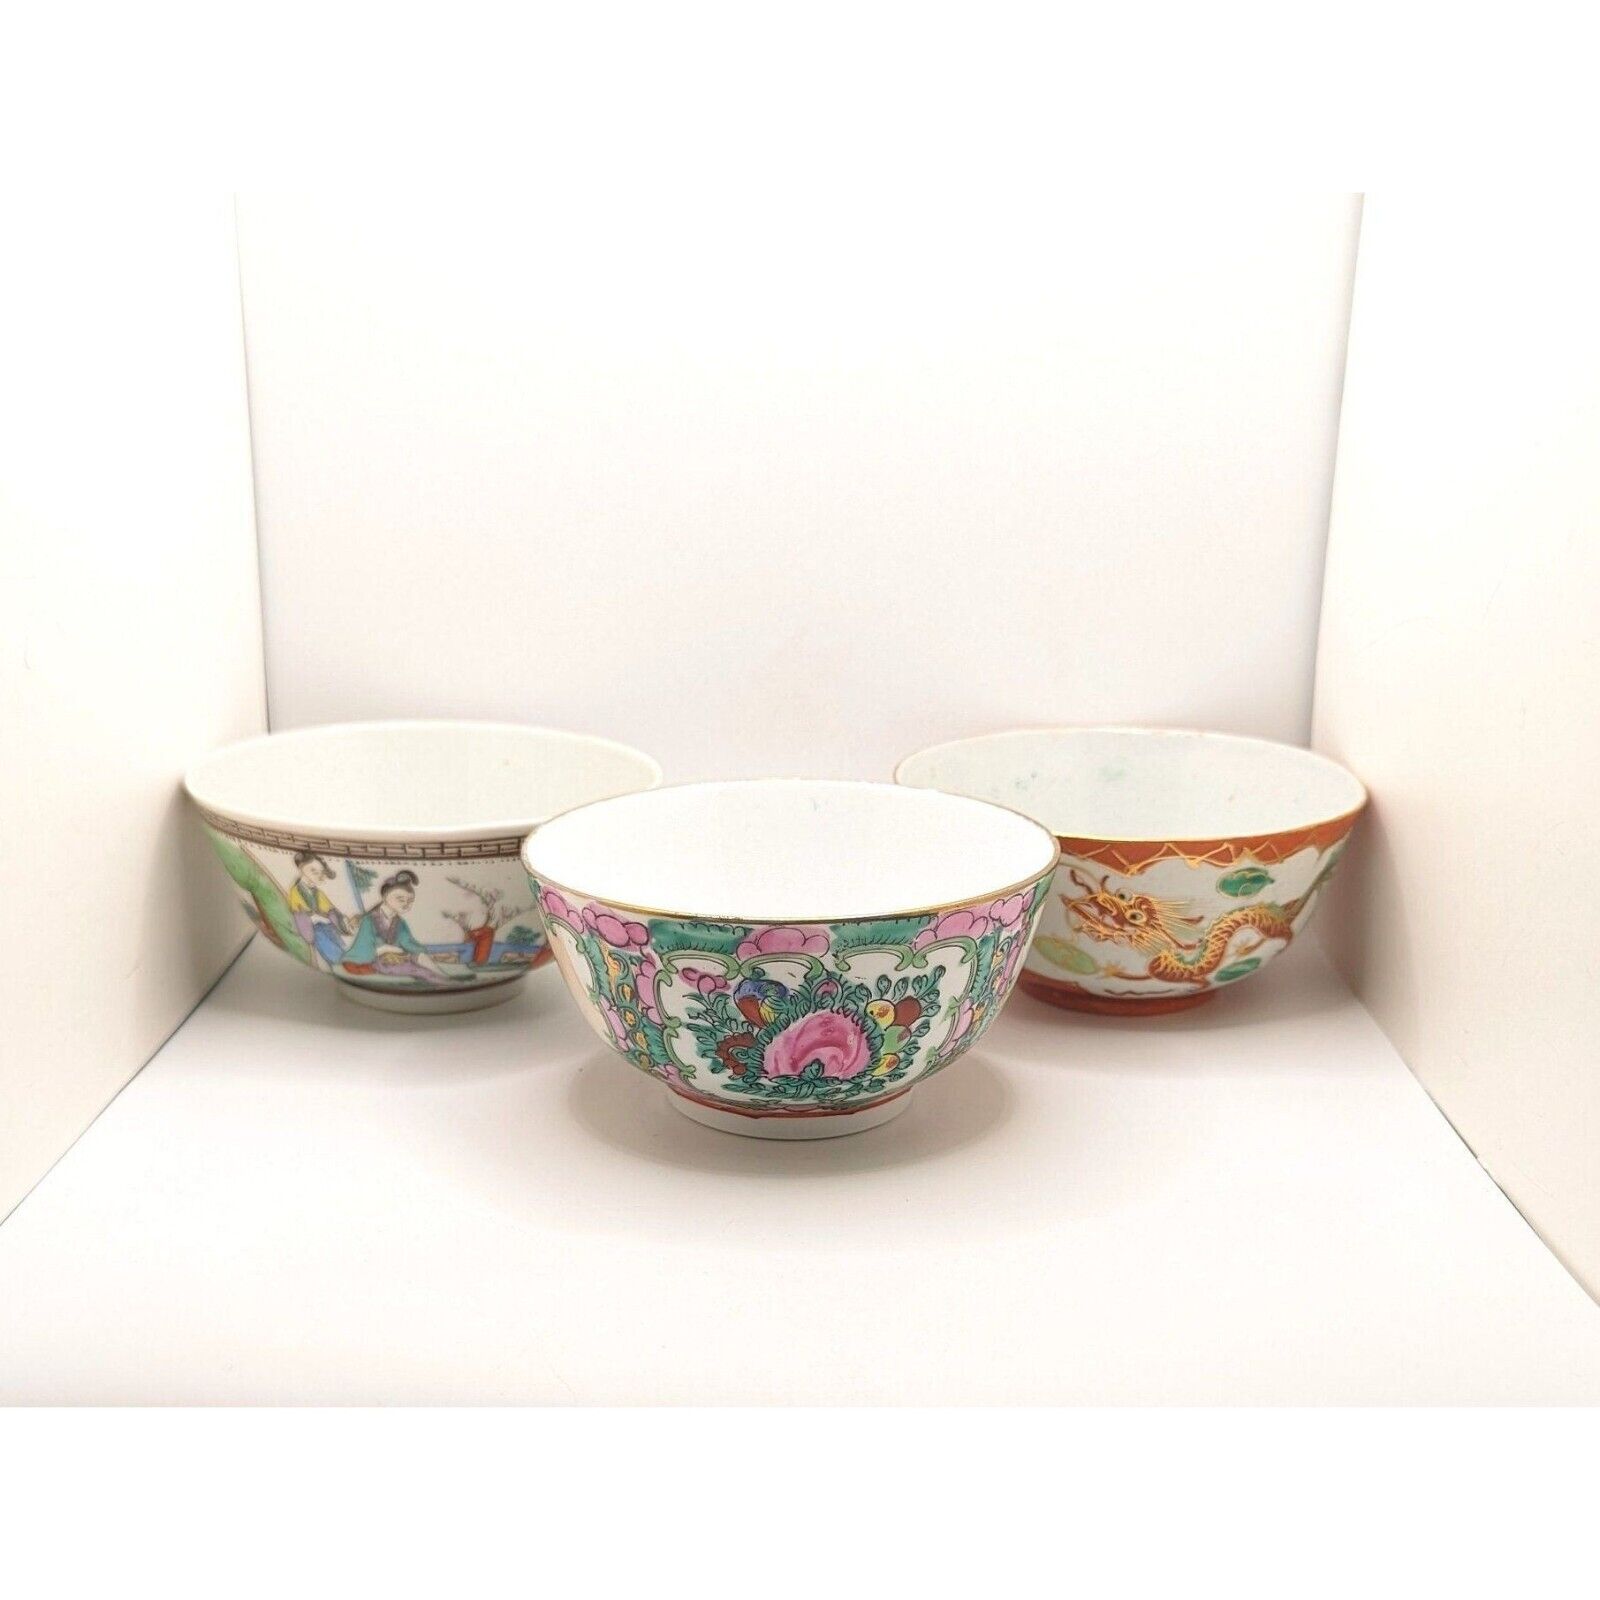 3 Vintage Porcelain Decorative Asian Small Bowl Bowls Hand Painted Floral Flower